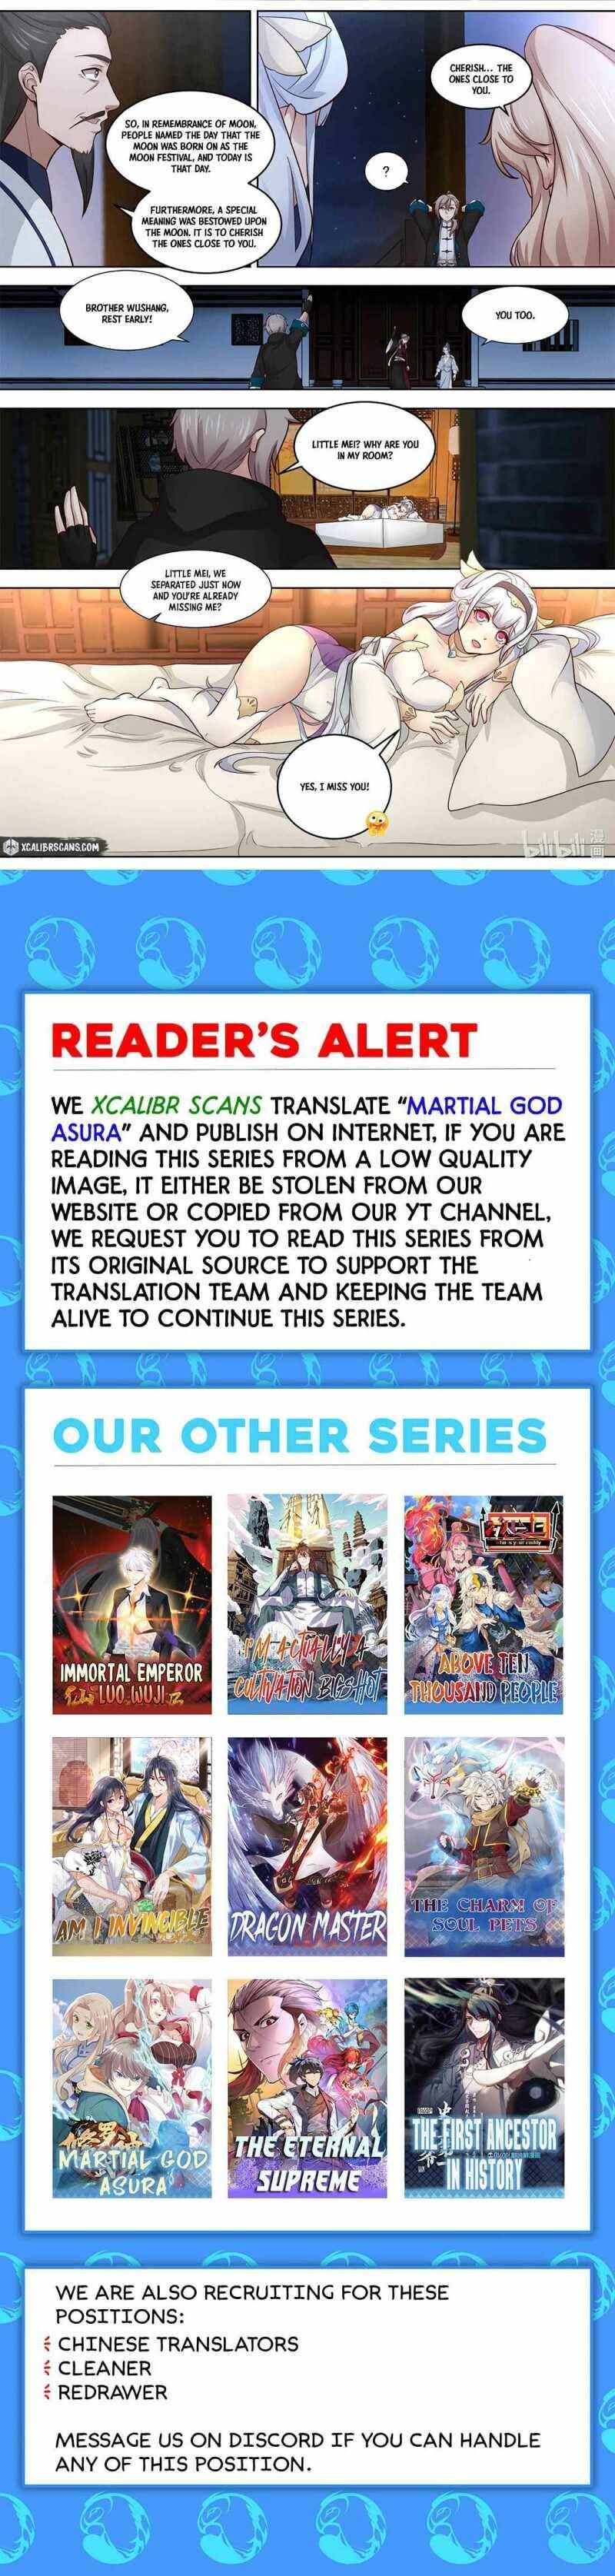 Martial God Asura Chapter 421 page 5